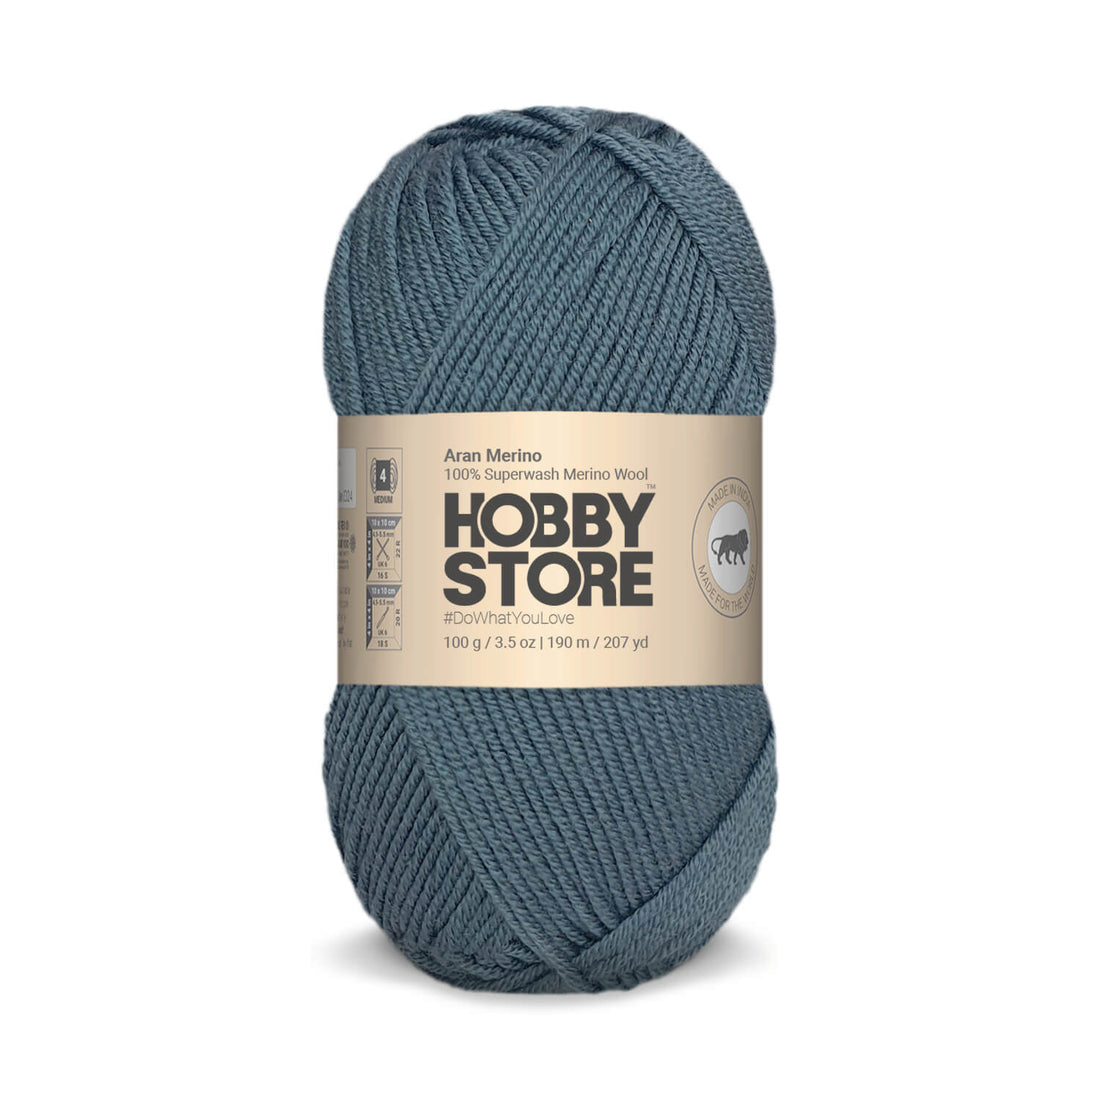 Aran Merino Wool by Hobby Store - Storm Blue AM008